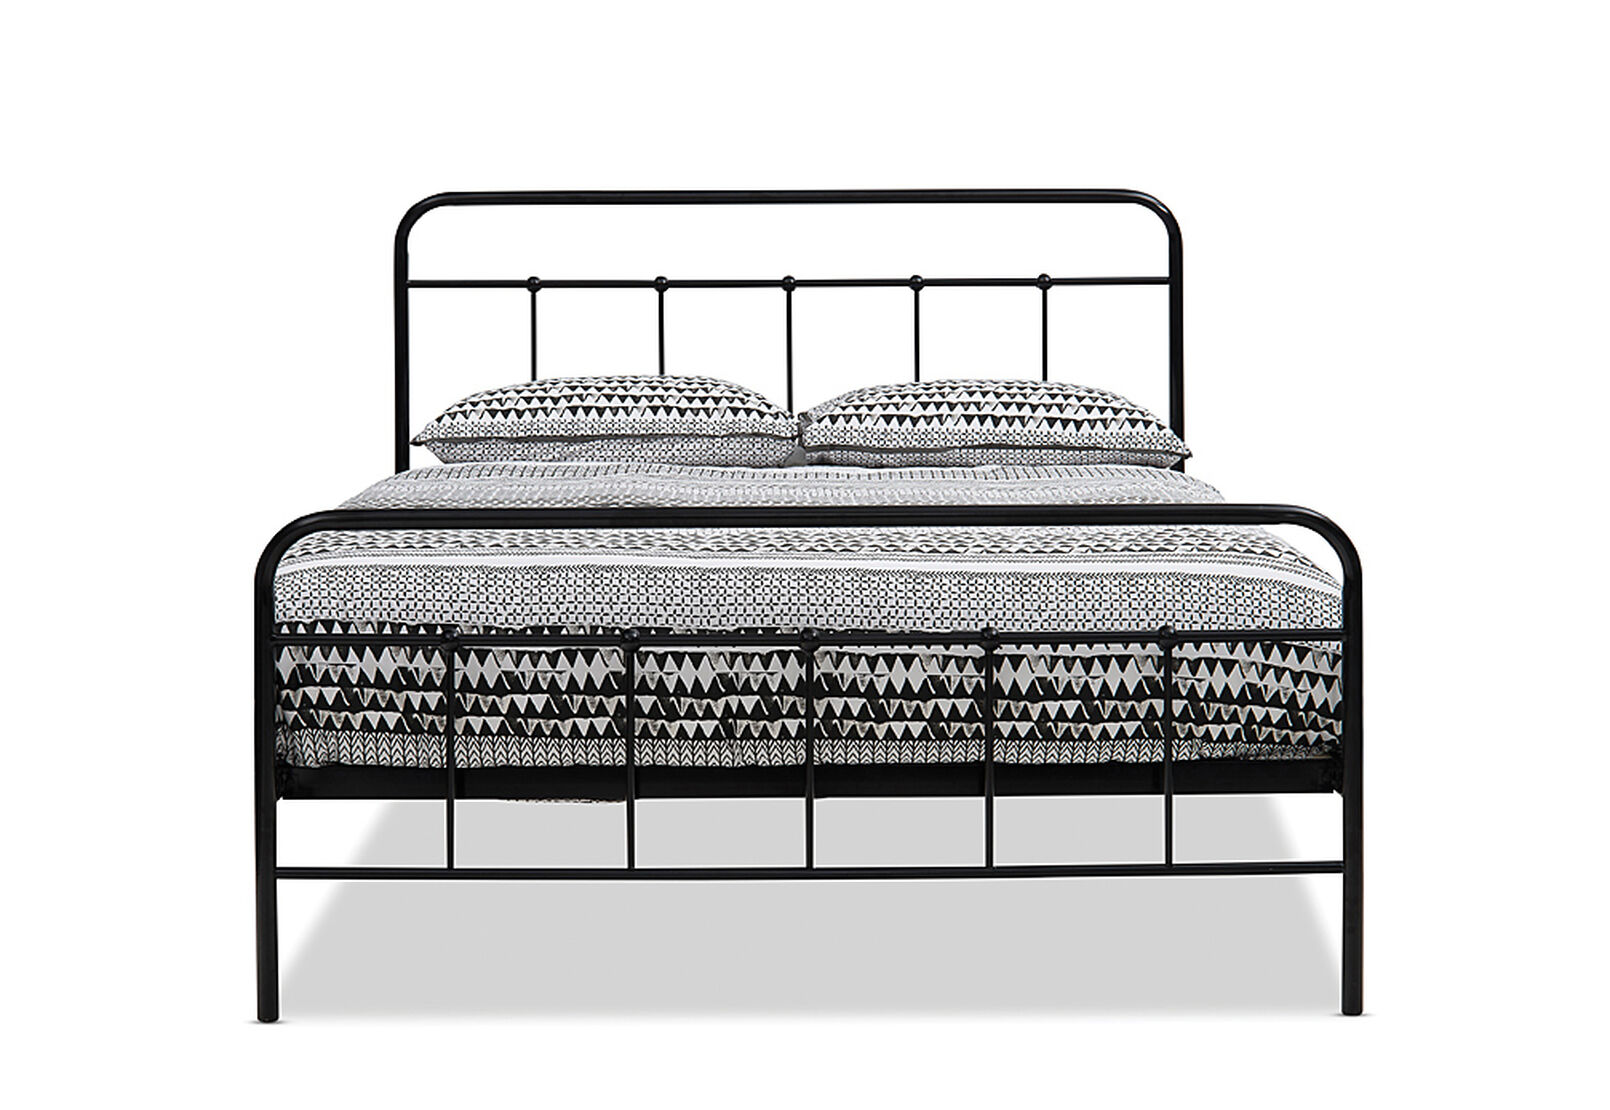 Premier Double Bed Amart Furniture